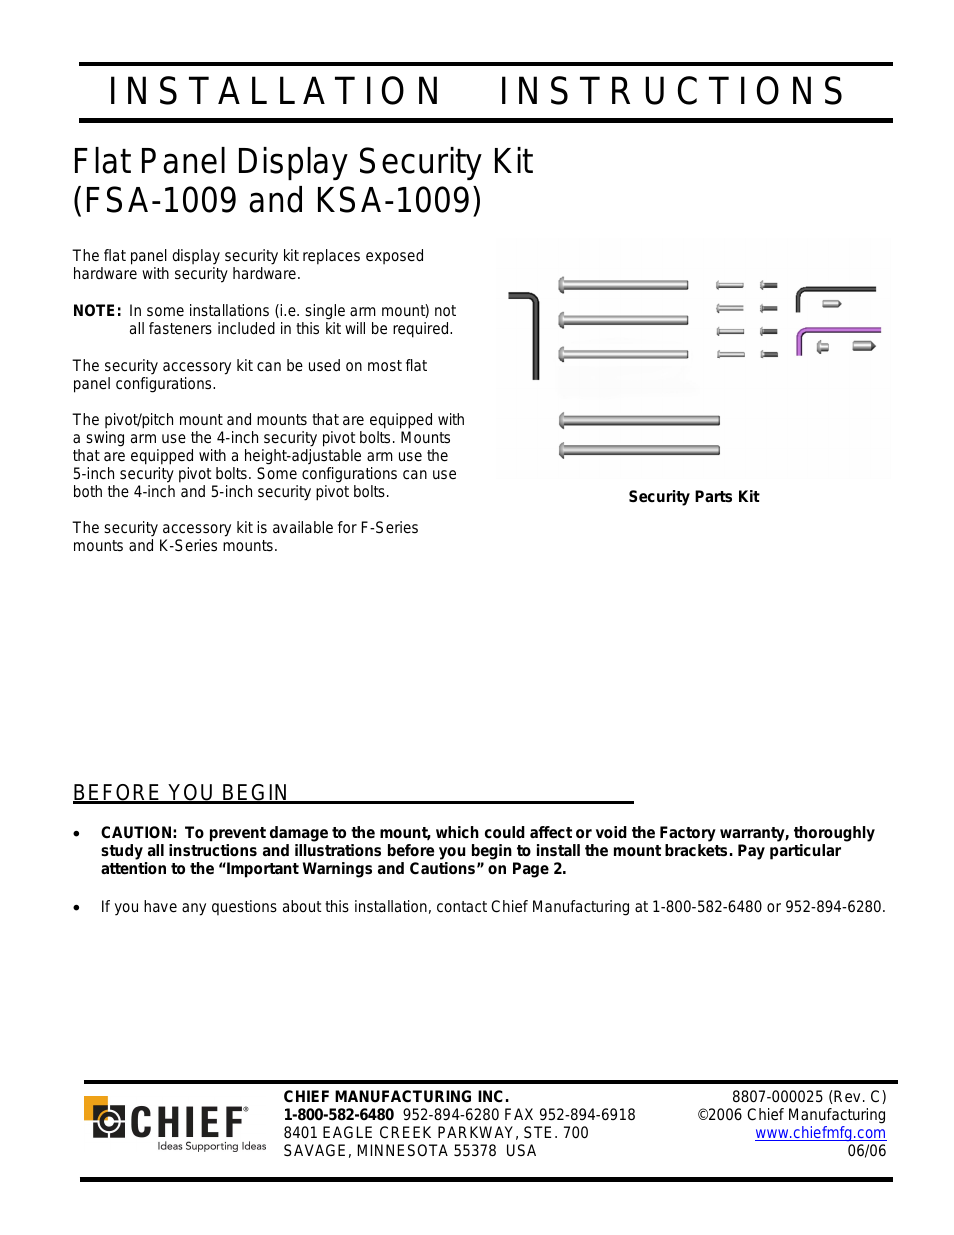 Flat Panel Display Security Kit KSA-1009